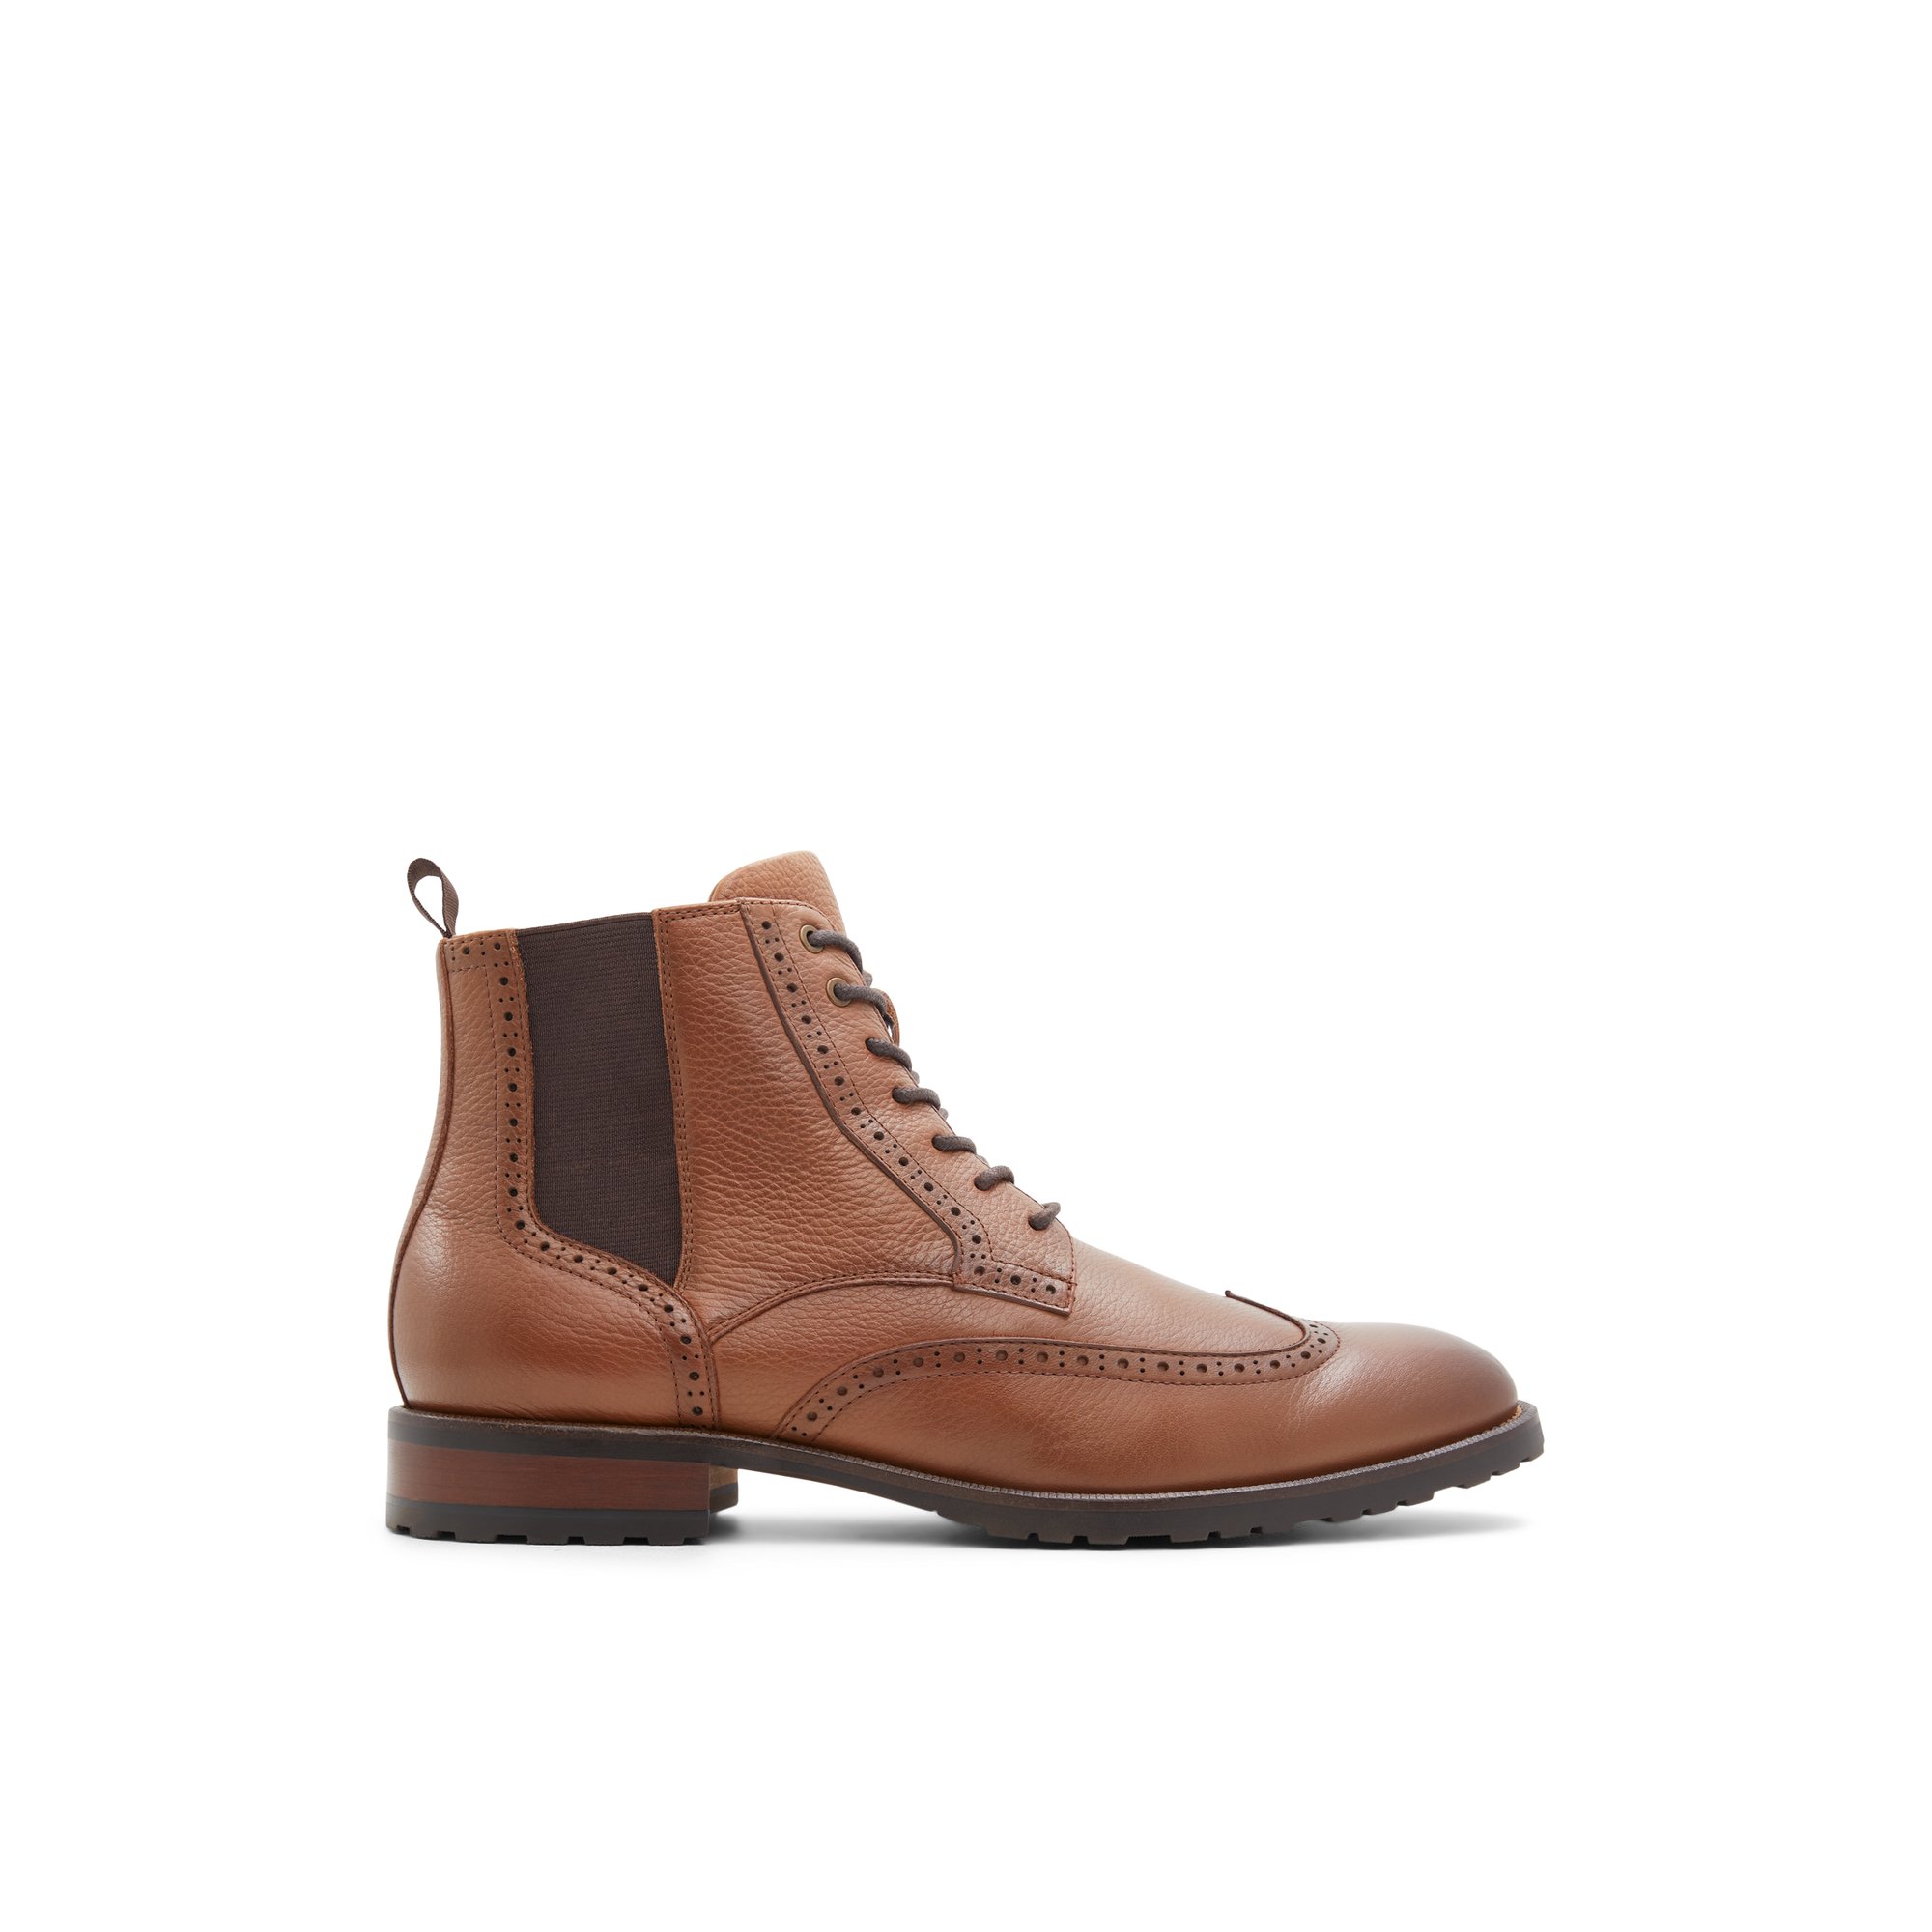 ALDO Salinger - Men's Boots Dress - Brown